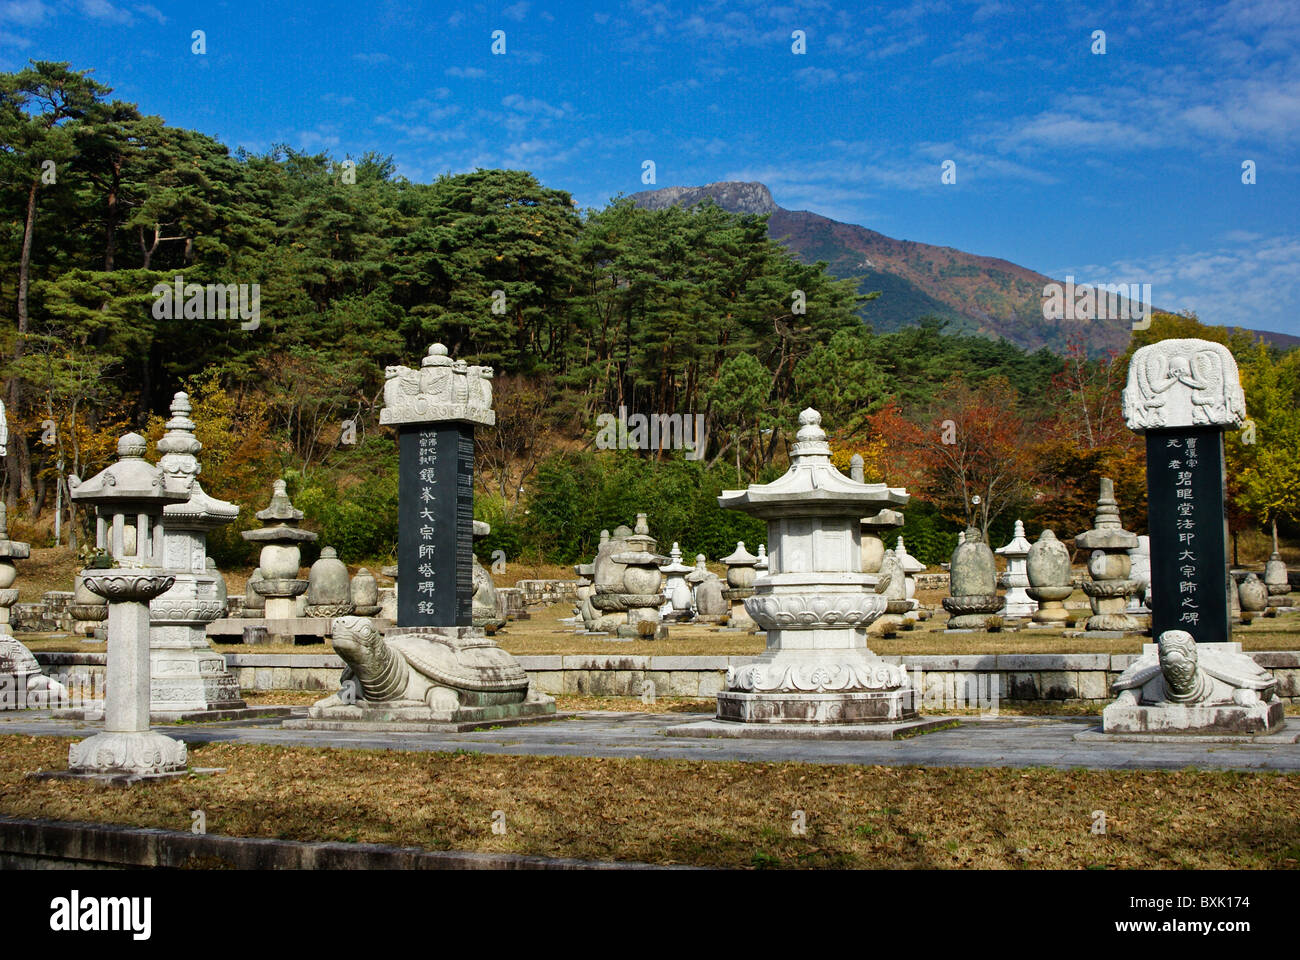 Memorials at Tongdosa Buddhist temple, South Korea Stock Photo